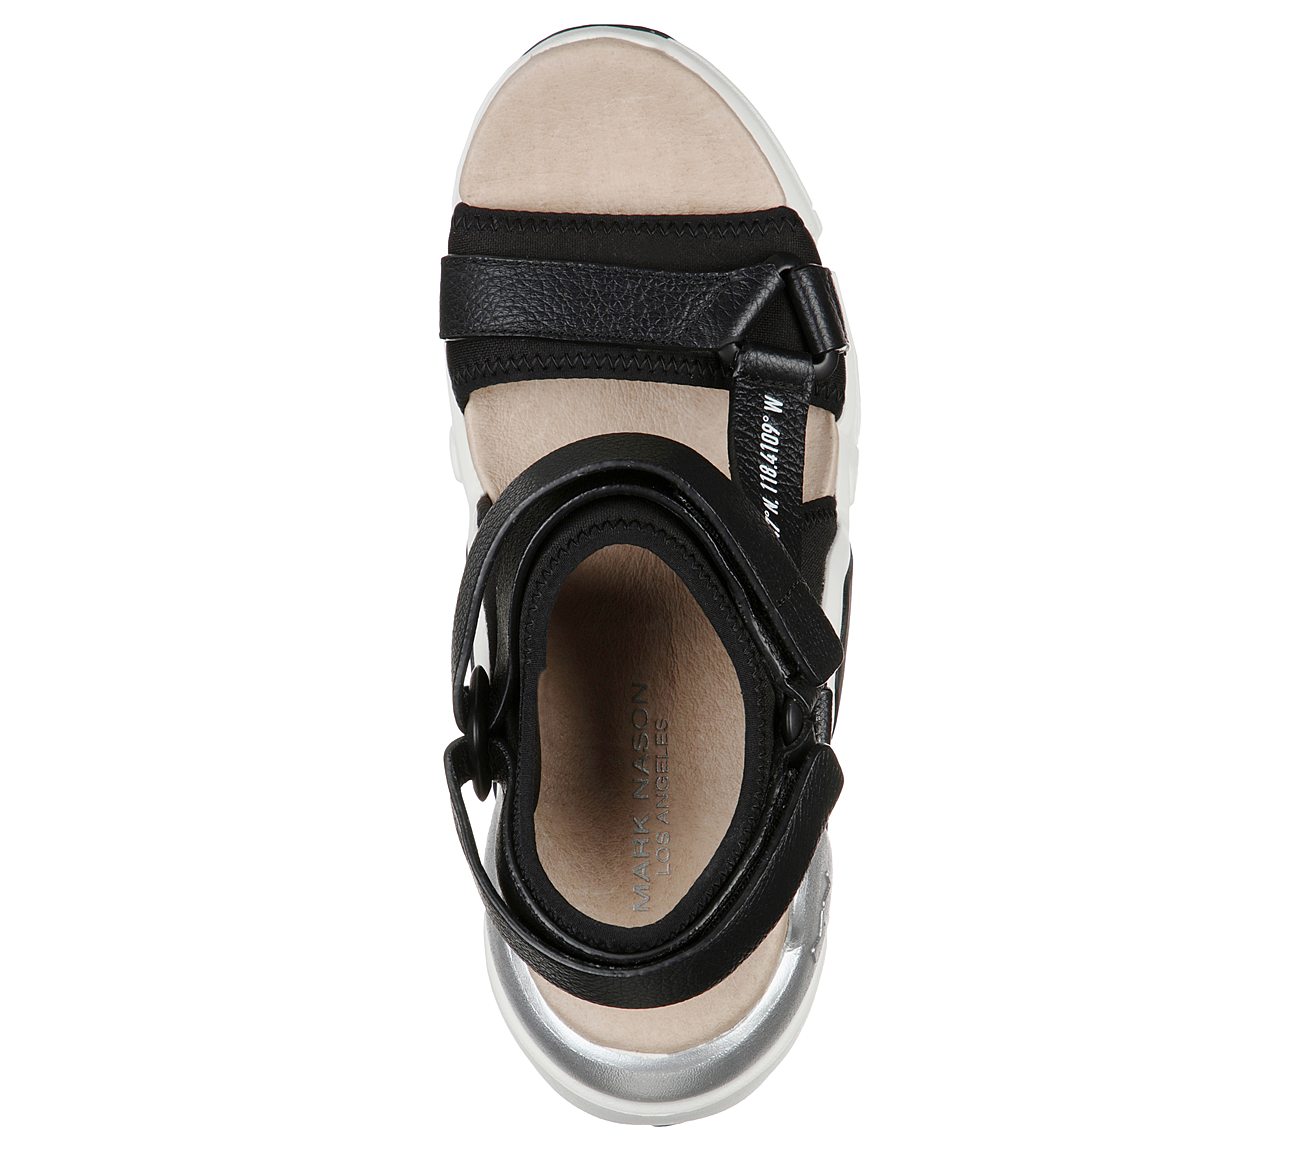 NEO BLOCK - DIDI, BLACK/WHITE Footwear Top View